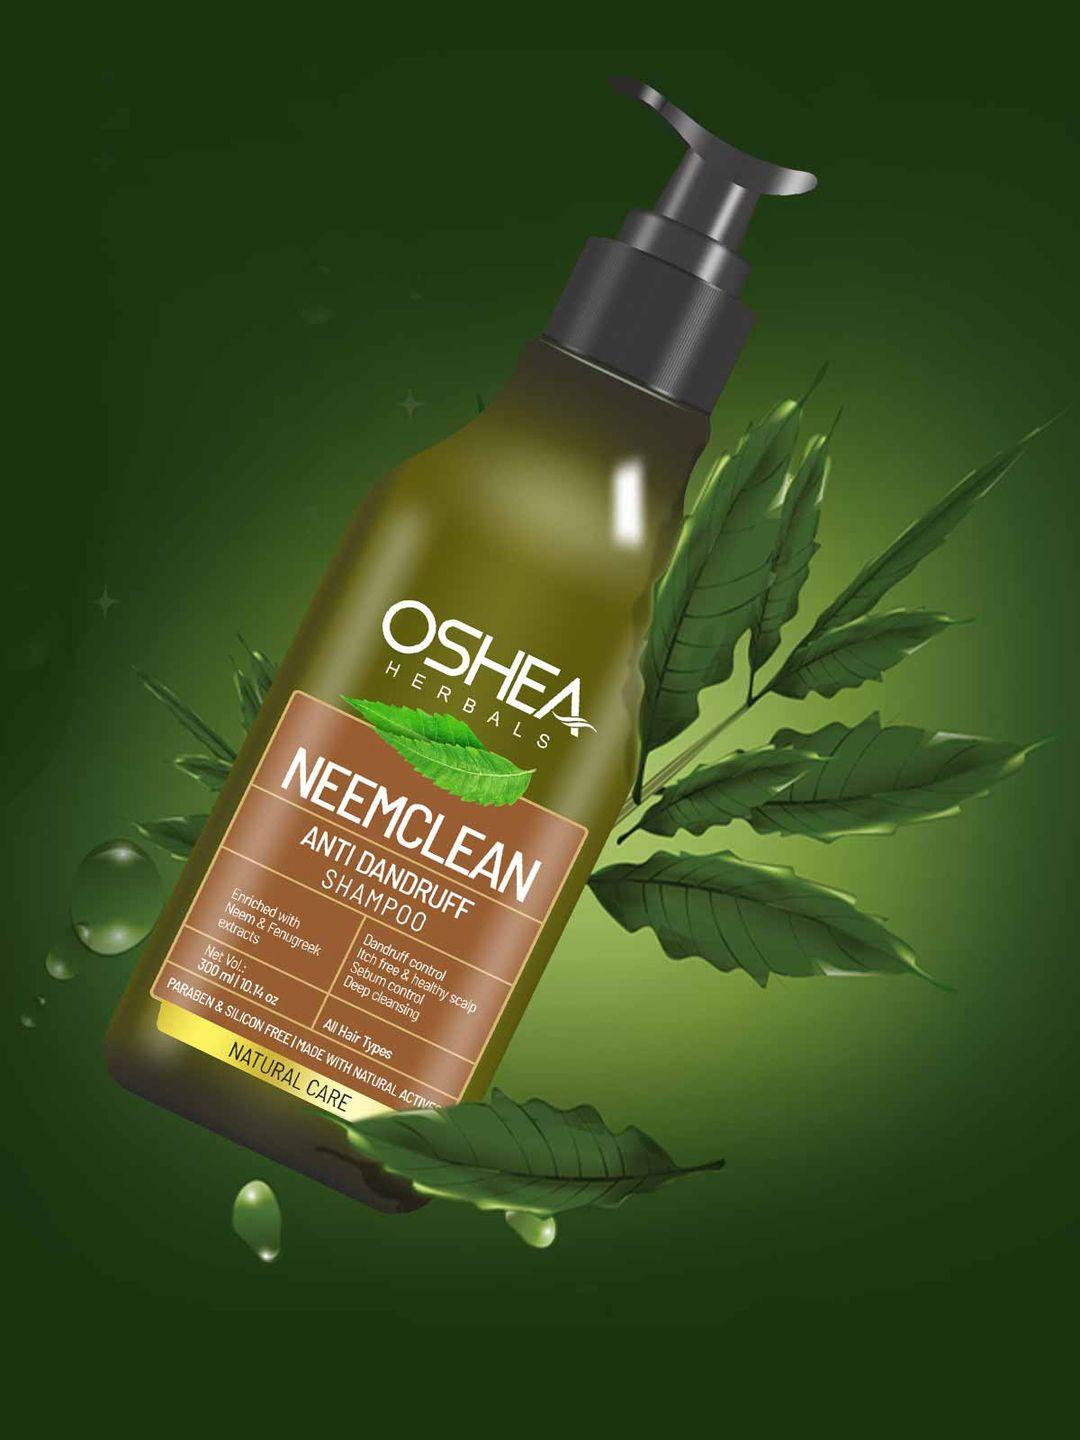 oshea herbals neemclean anti dandruff shampoo with fenugreek extracts 300 ml